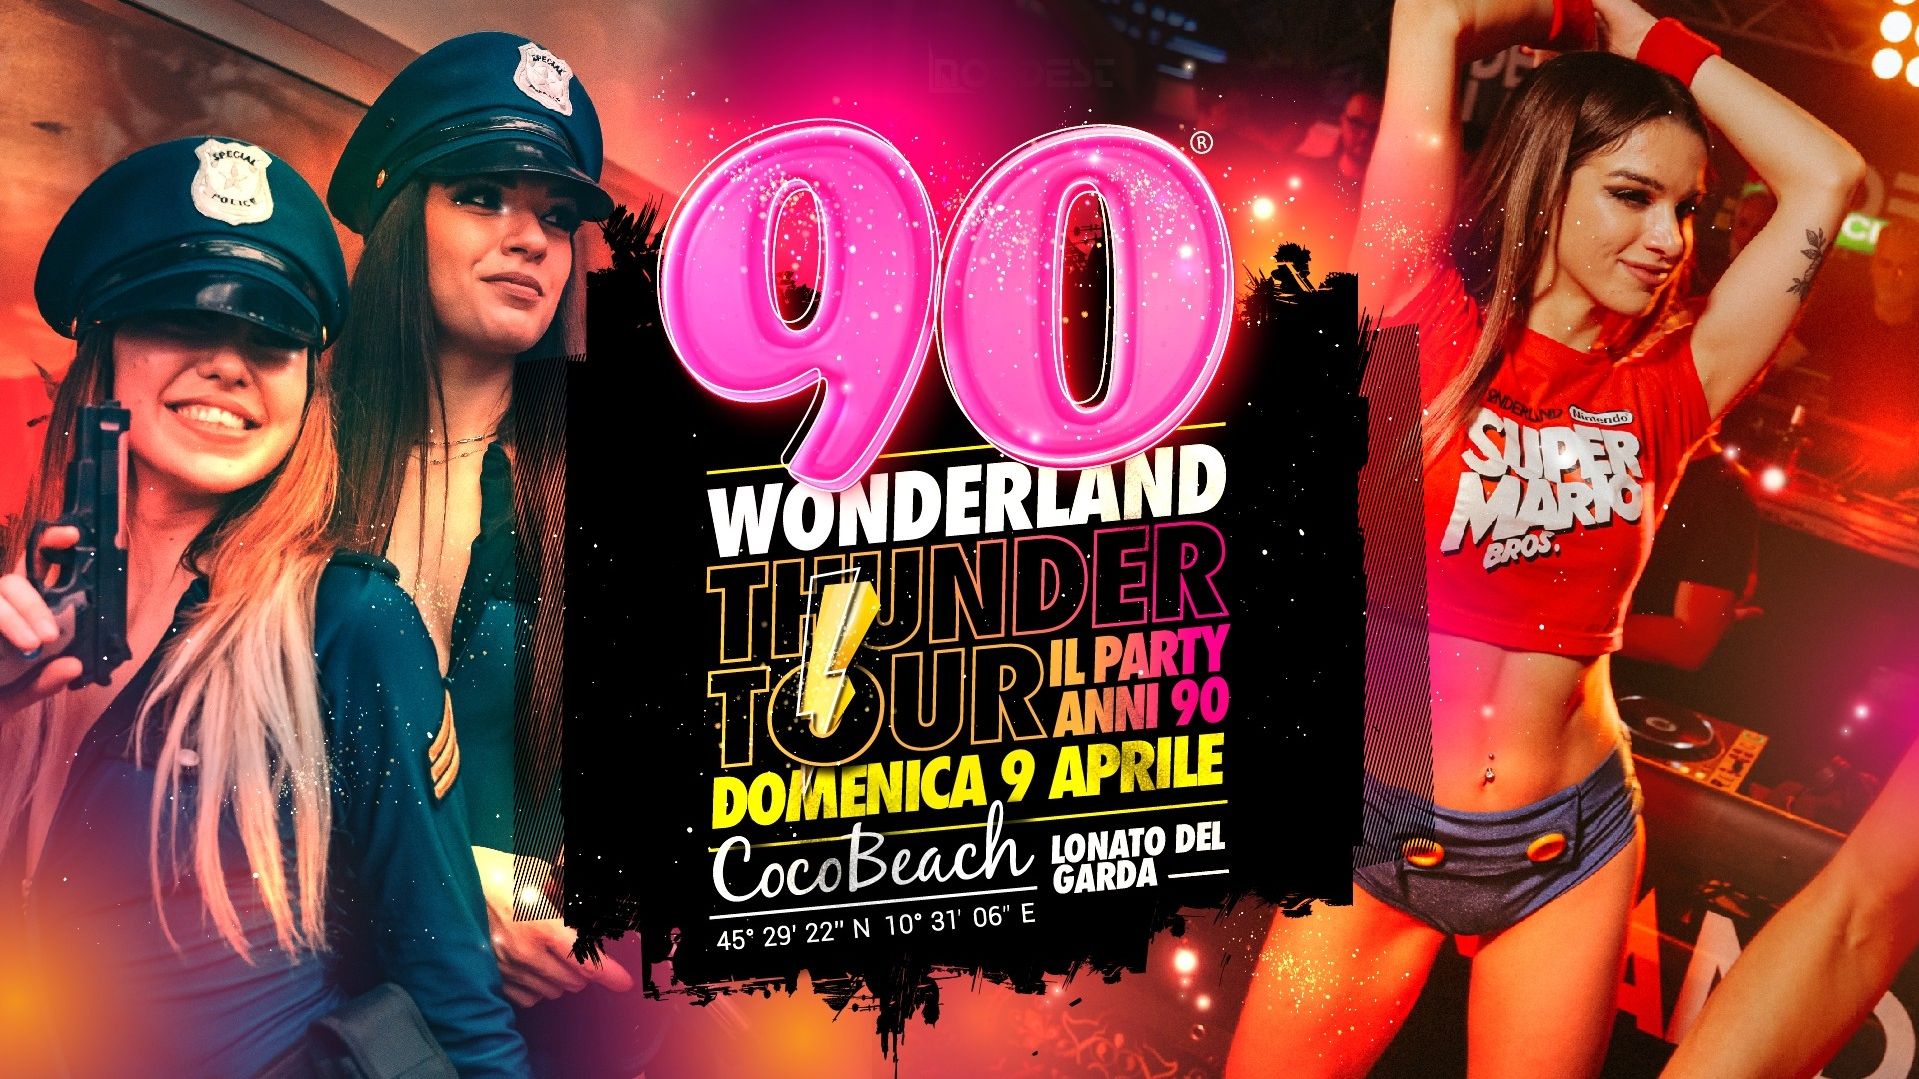 90 Wonderland Thunder Tour - La Notte di Pasqua